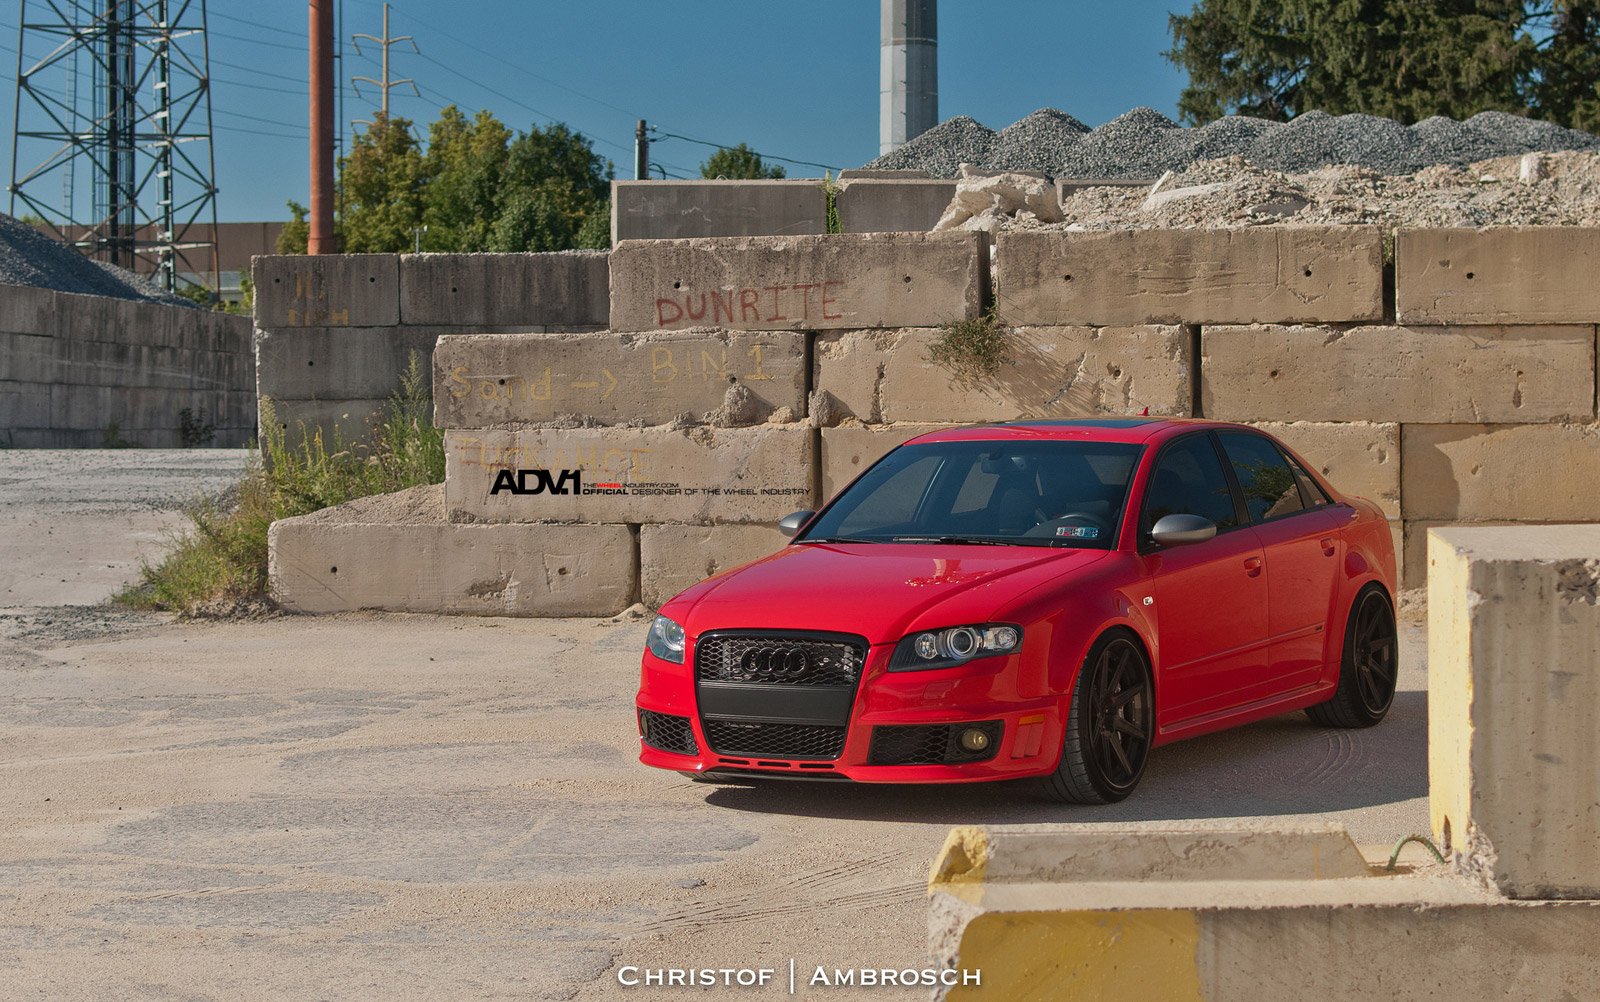 2014, Audi, Rs4, Adv1, Wheels, Tuning Wallpaper